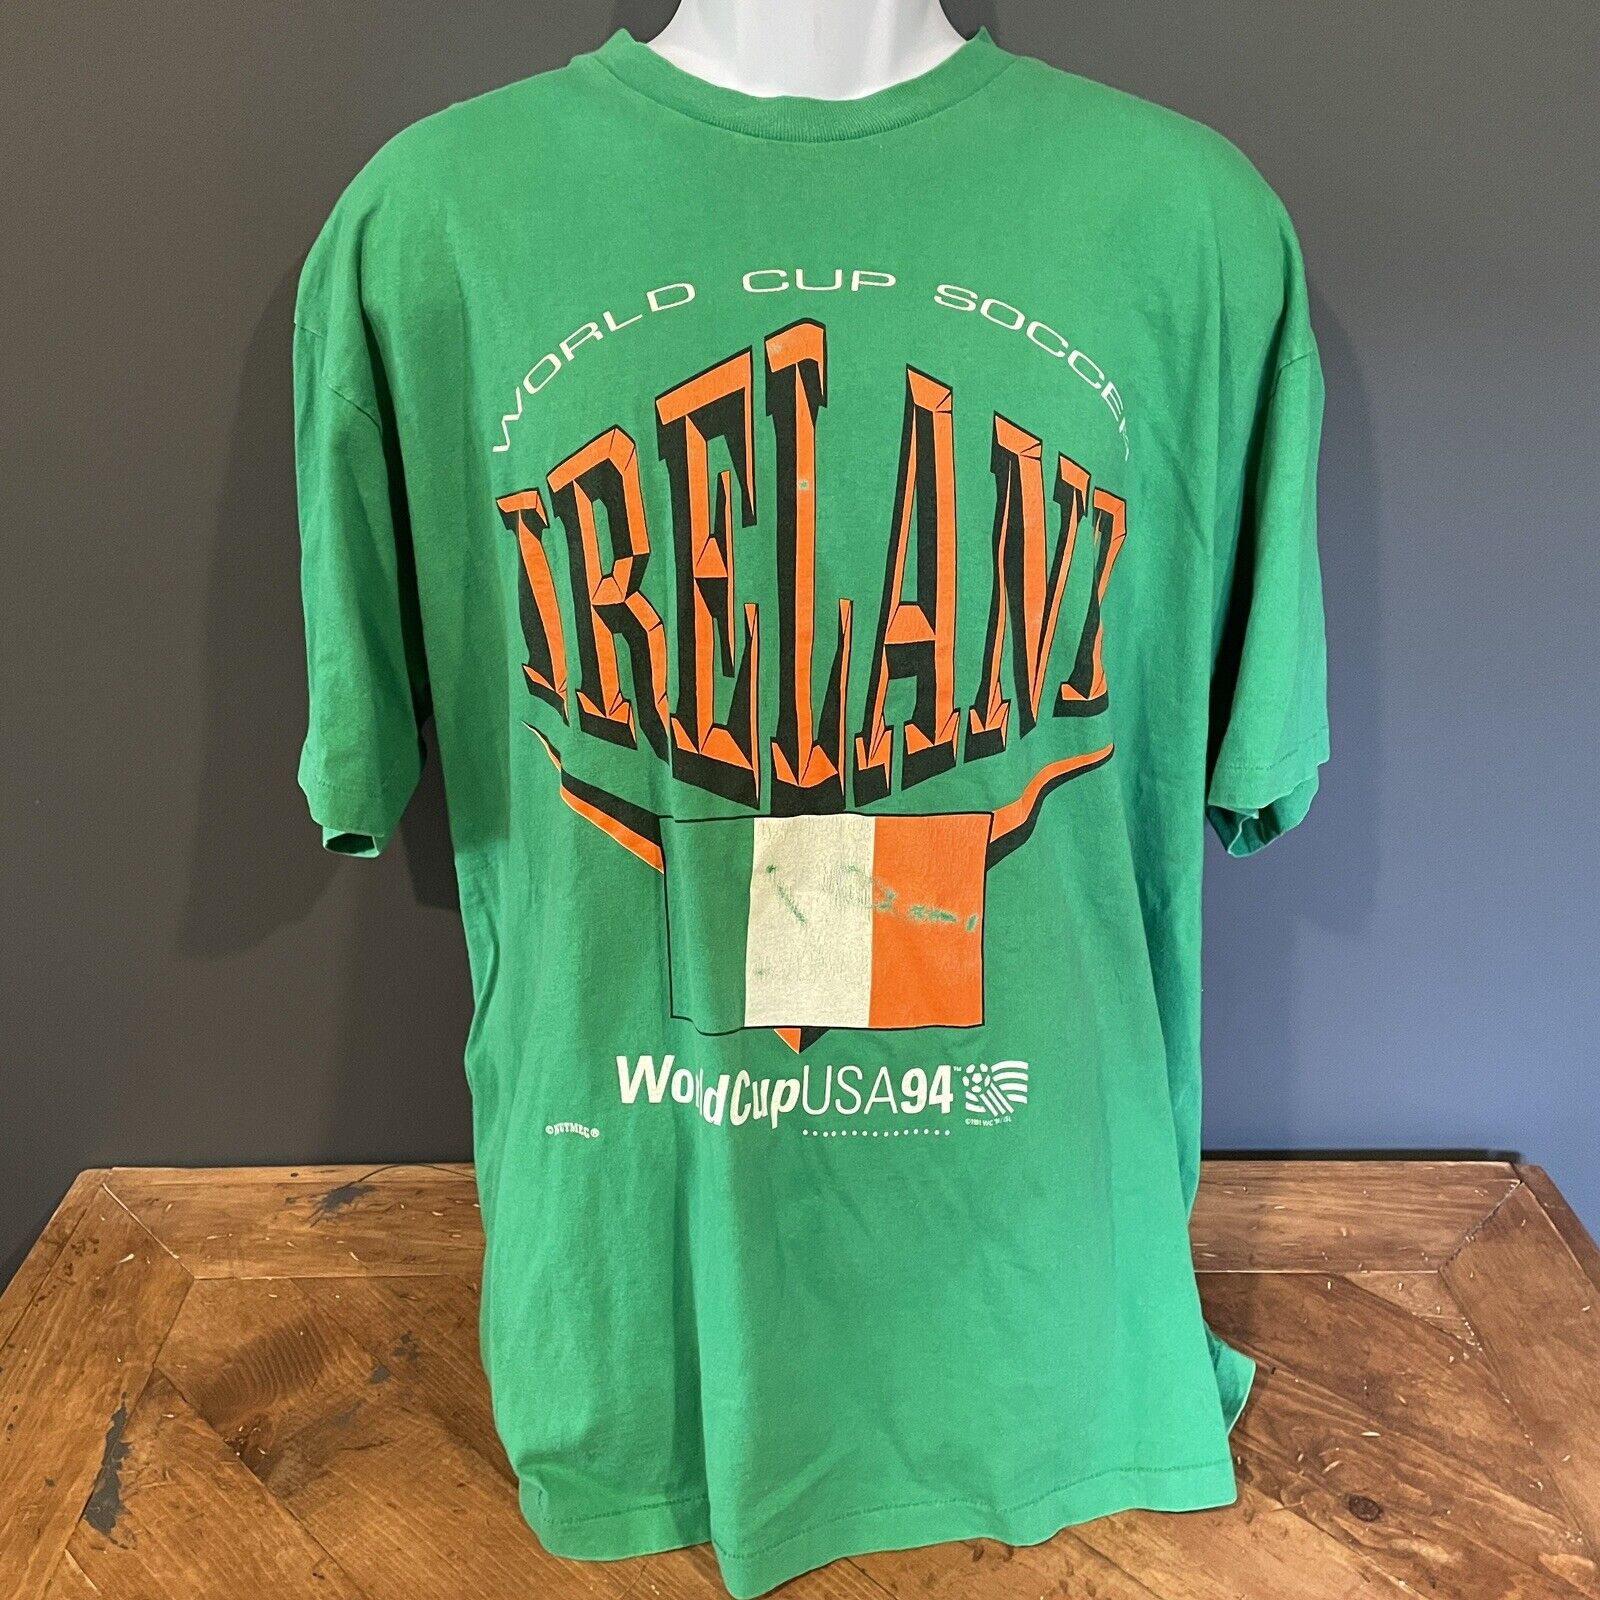 Vintage 1991 Ireland World Cup 94 Men’s T-Shirt